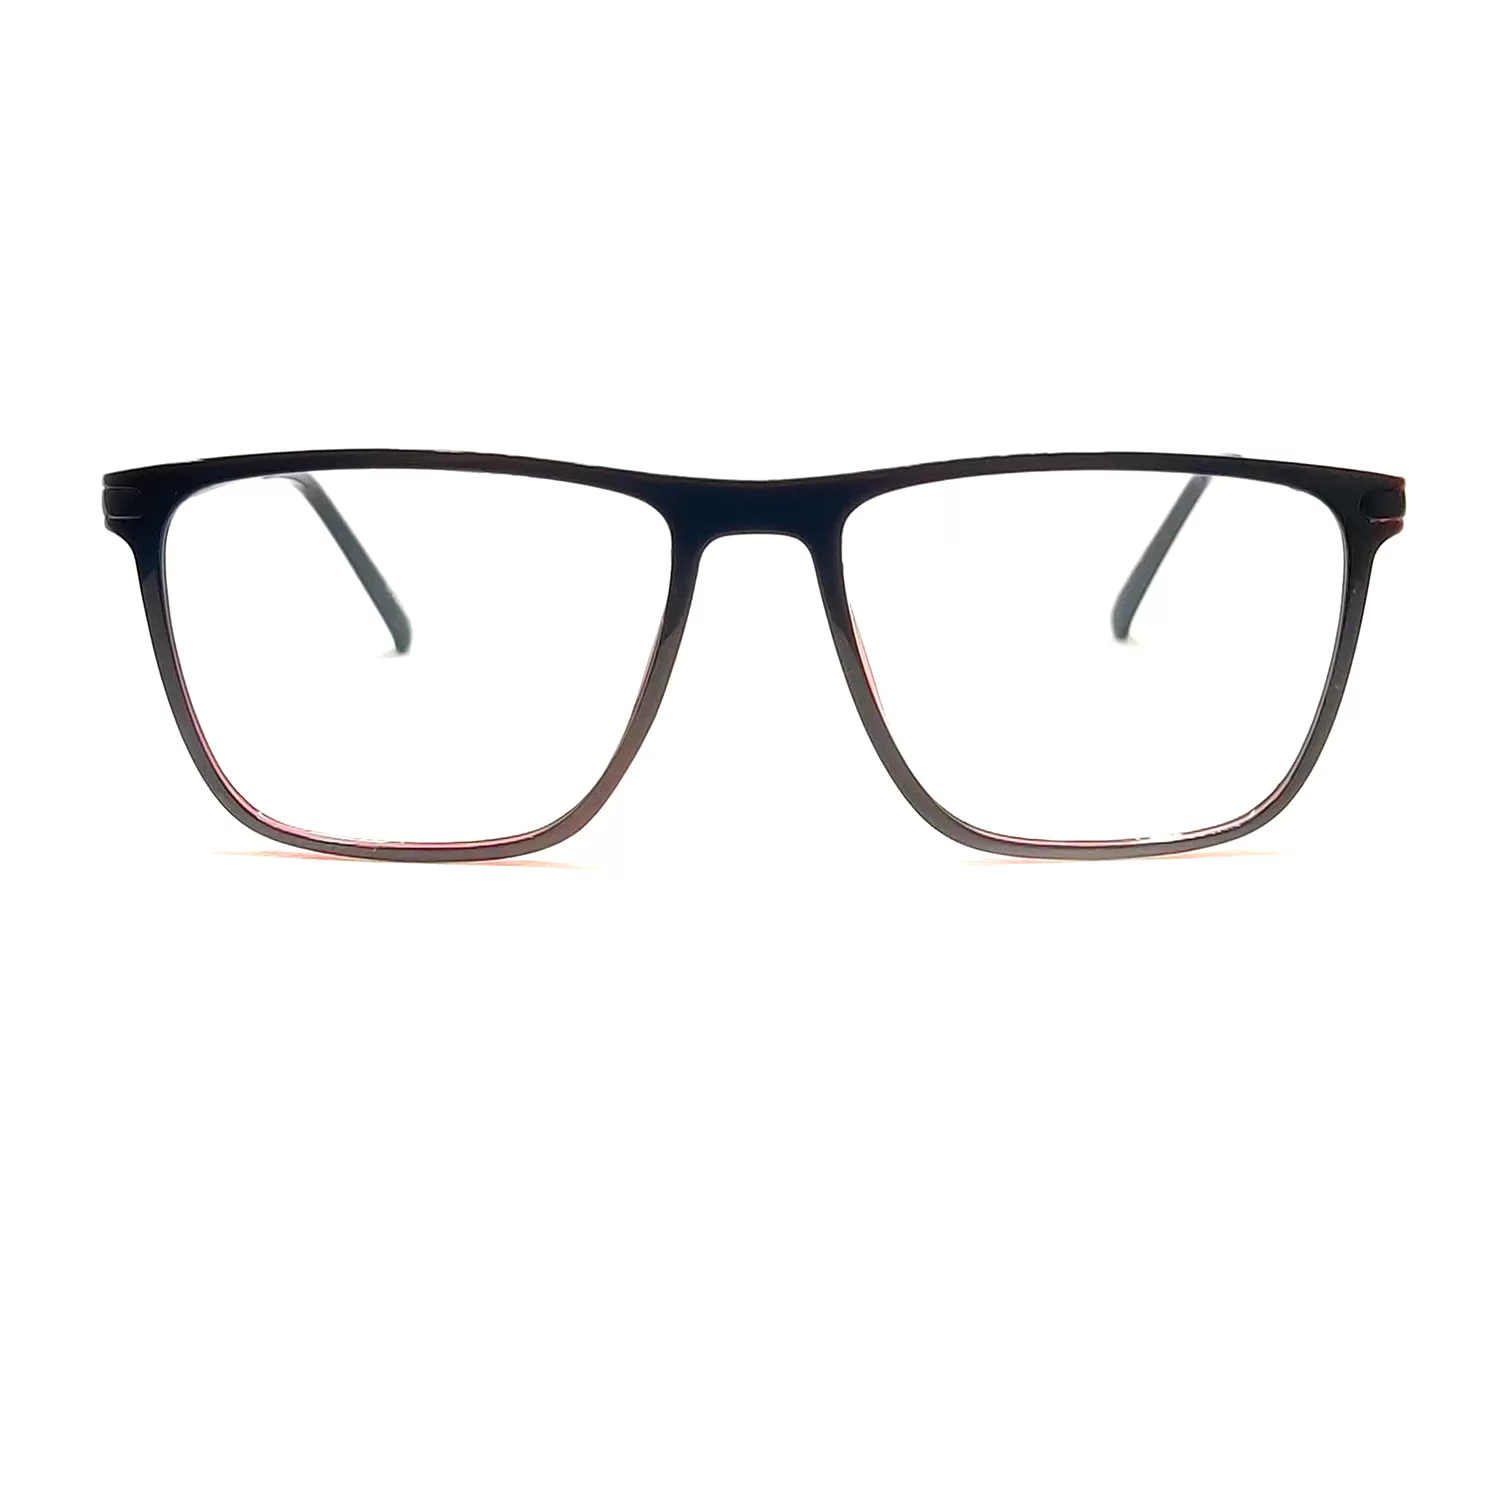 buy eyeglasses online at chashmah.com